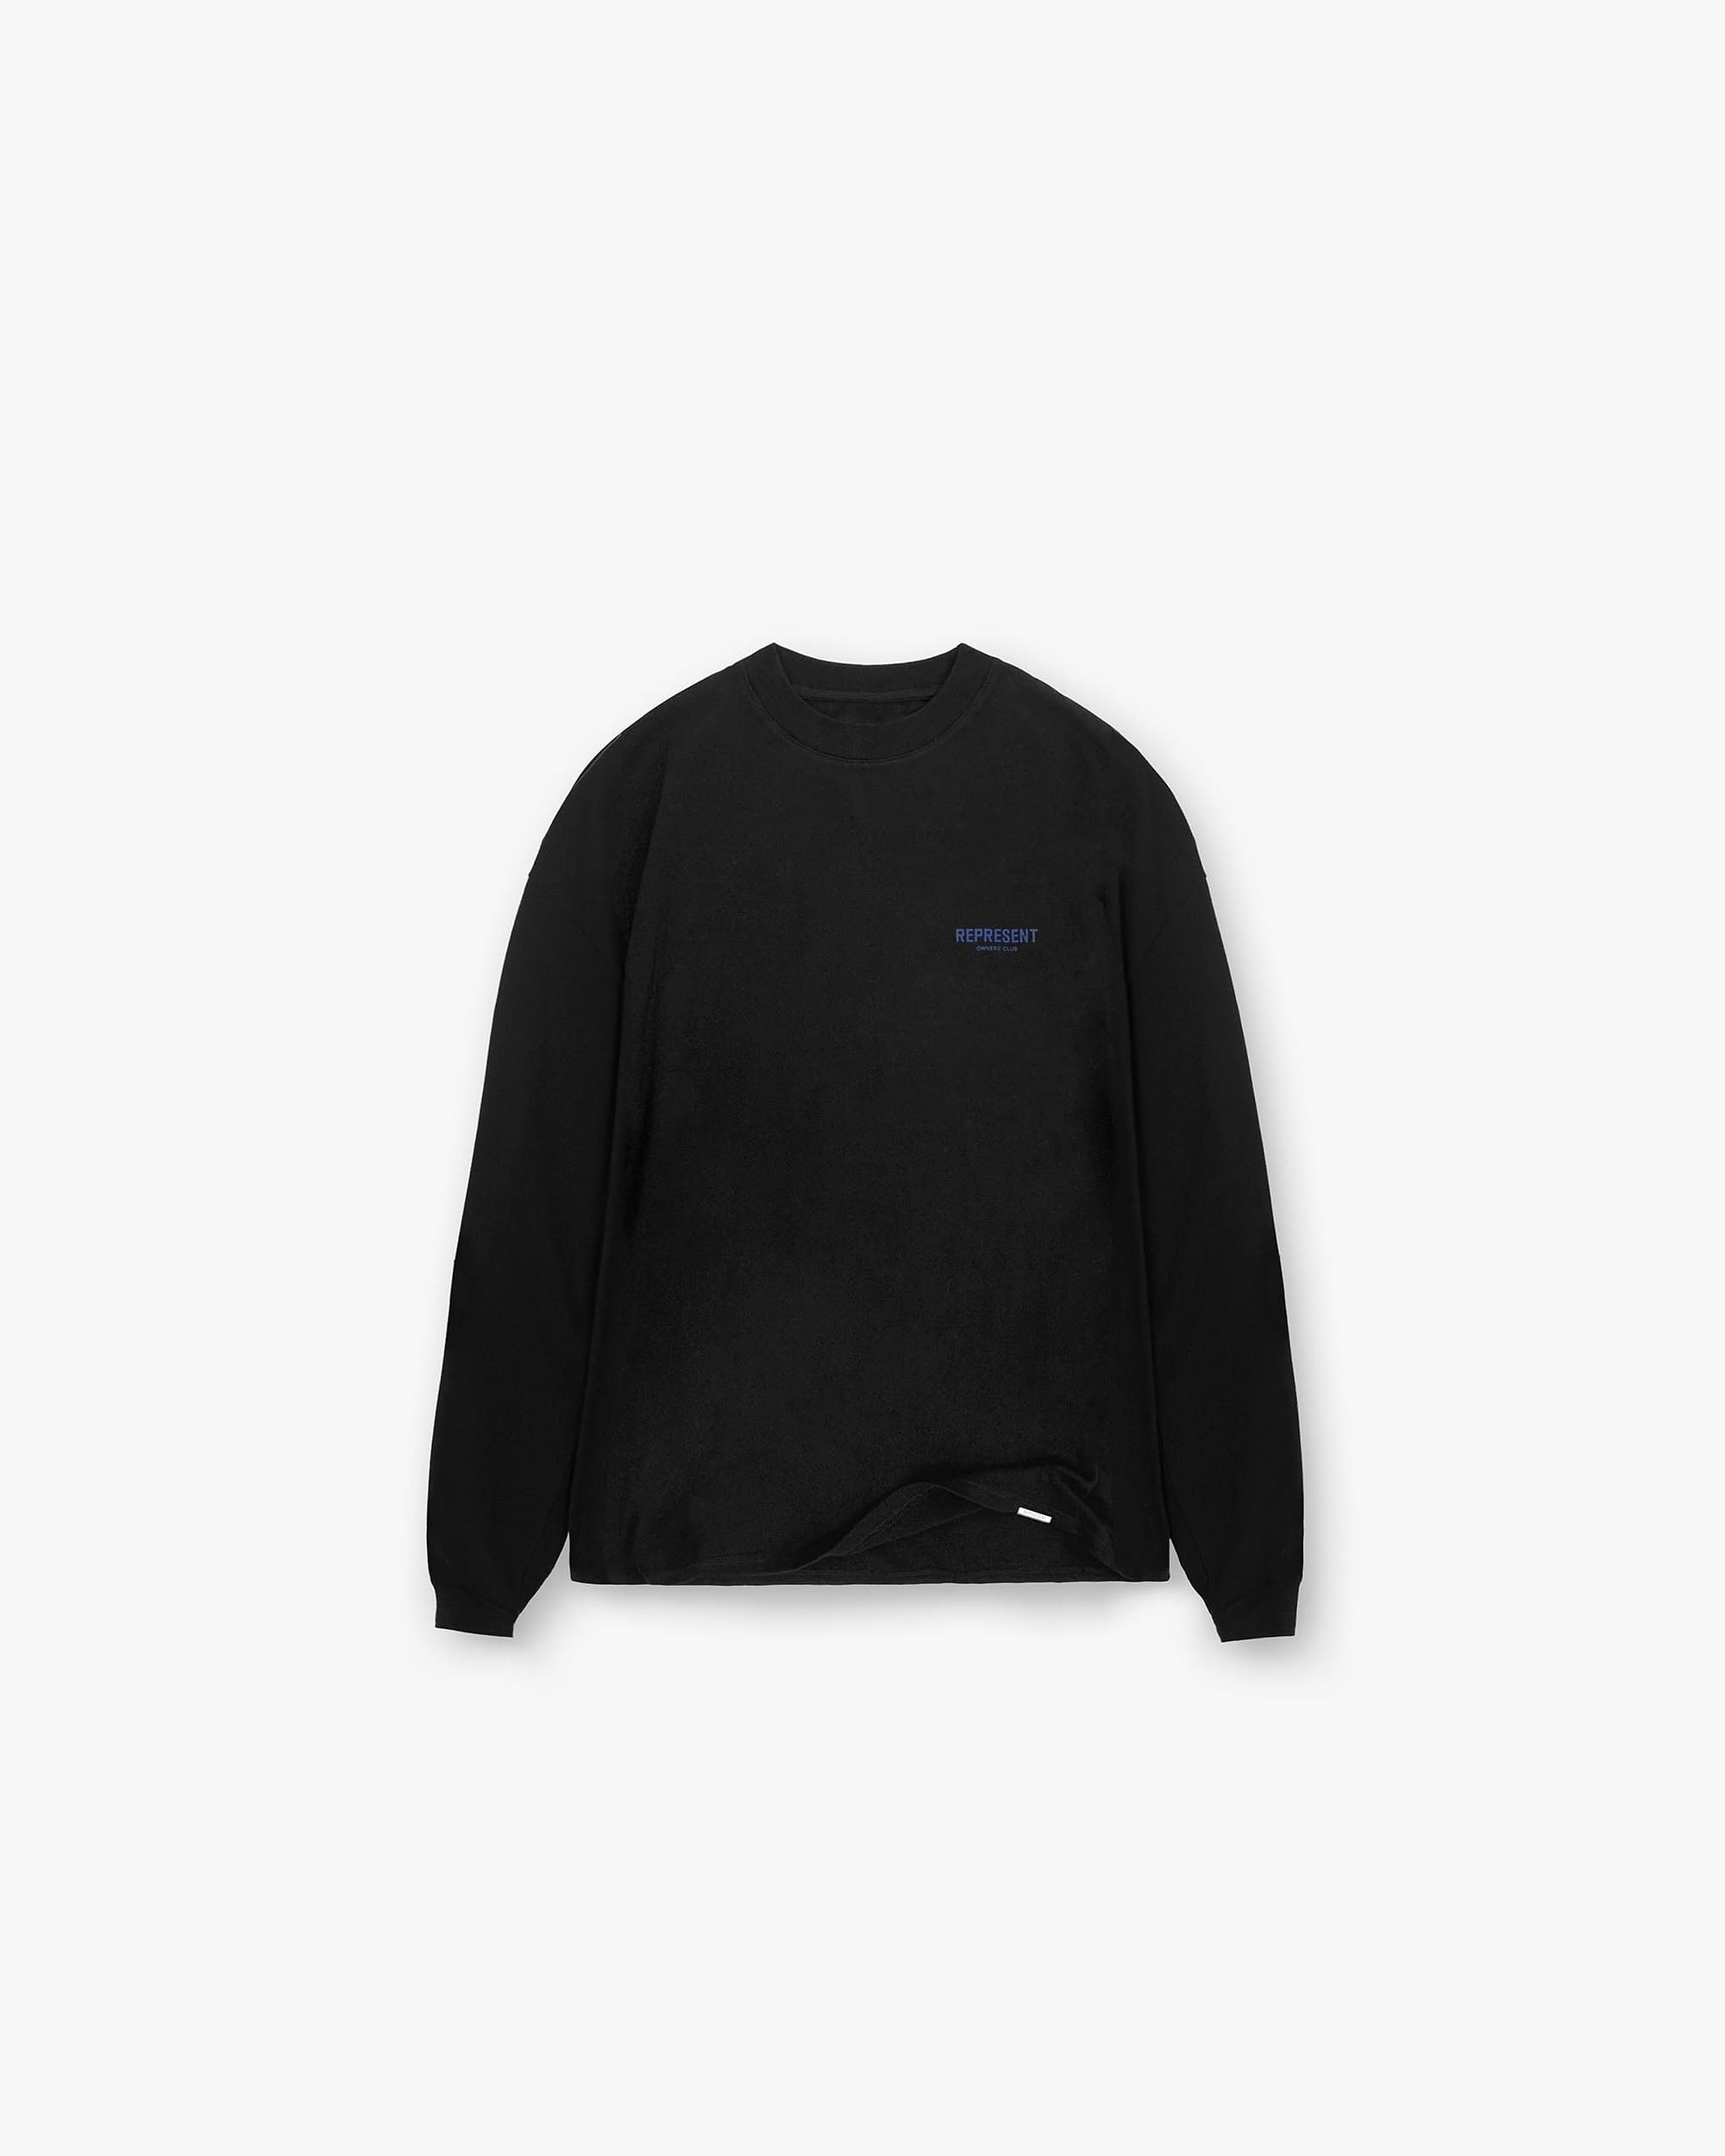 Represent Owners Club Long Sleeve T-Shirt - Black Cobalt